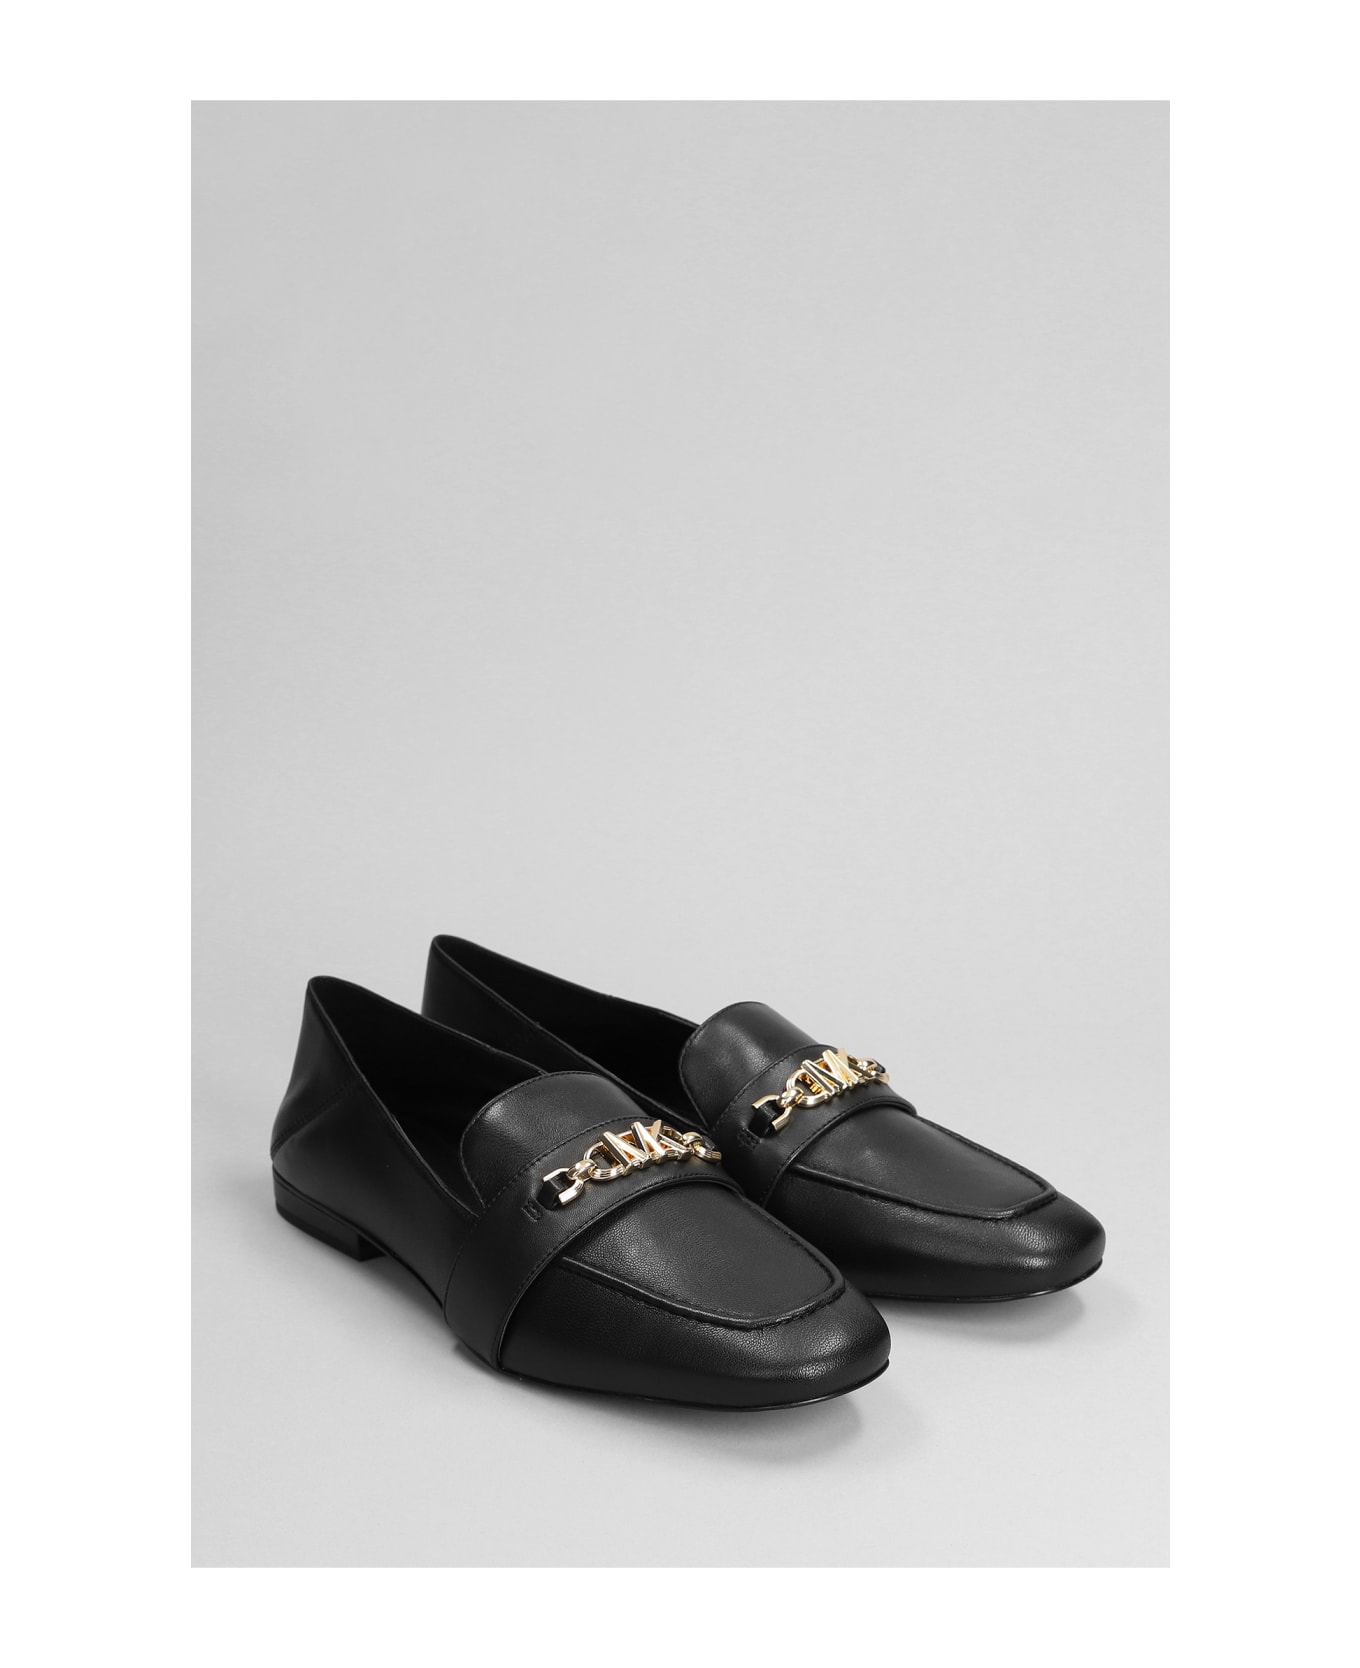 Michael Kors Tiffanie Loafer Loafers In Black Leather - black